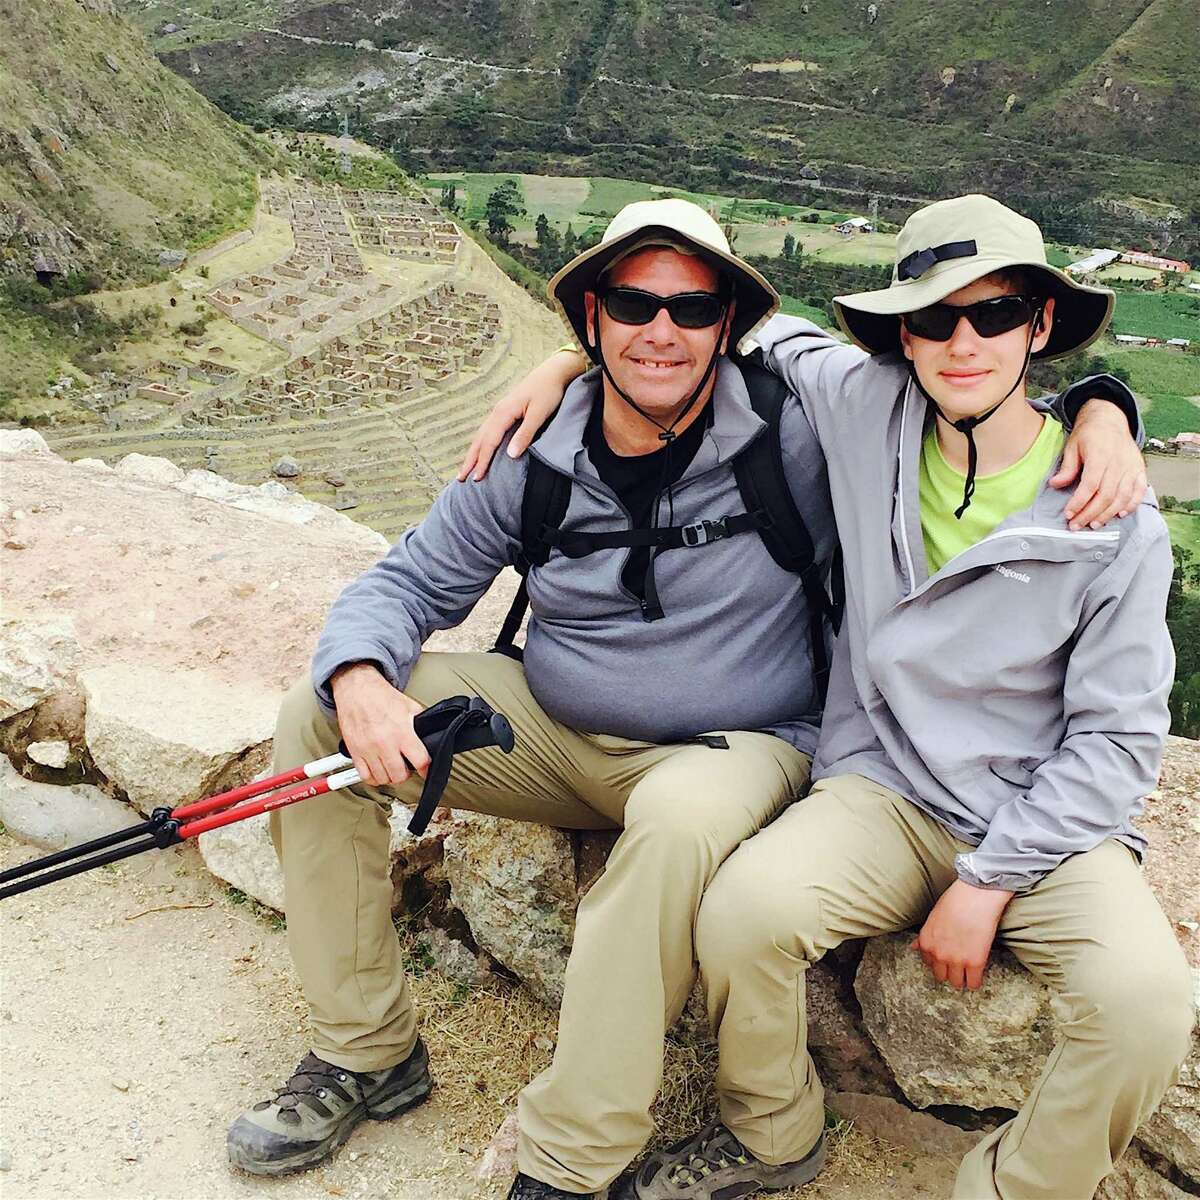 Ben and Alan Shmaruk, of Westport, on a hiking trip in Peru.